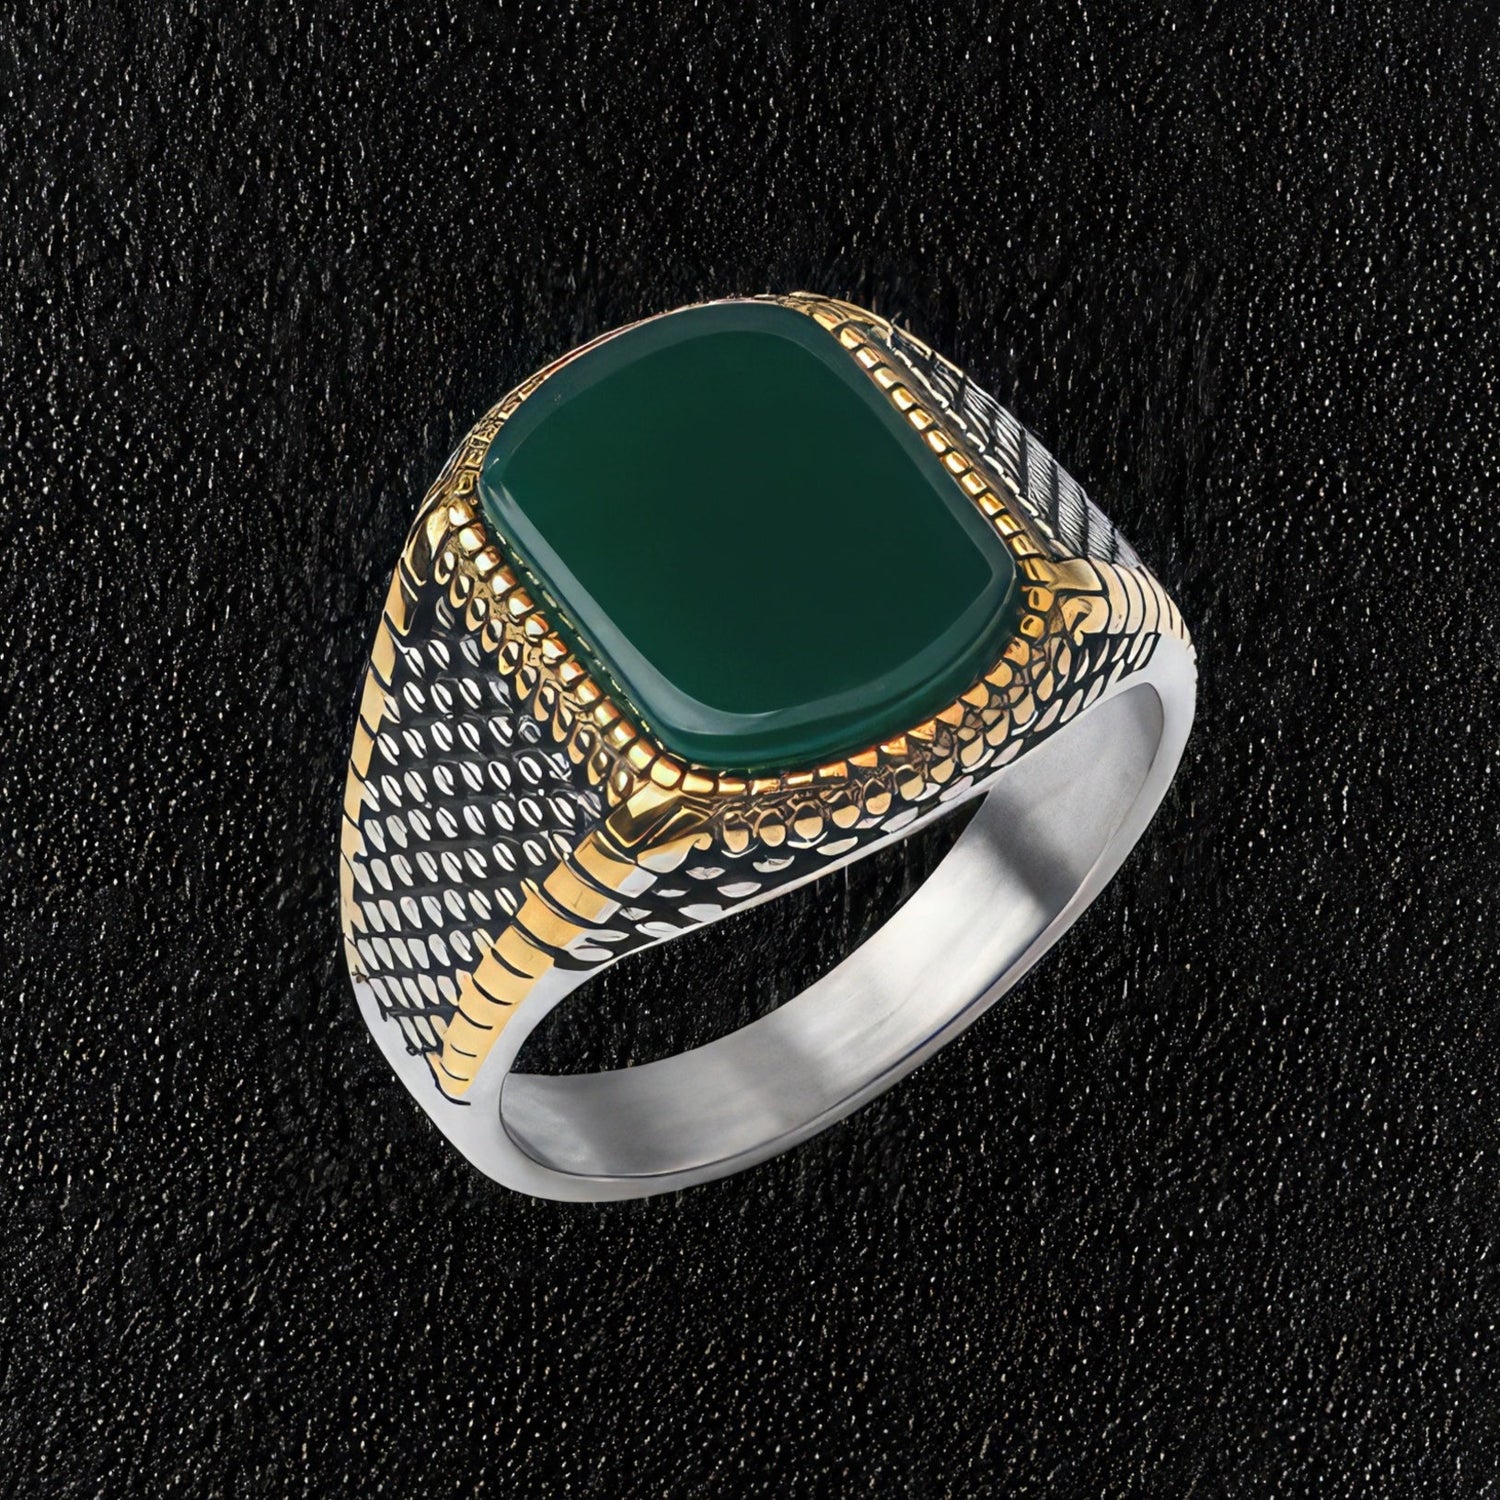 Ottoman Empire Green Onyx Ring